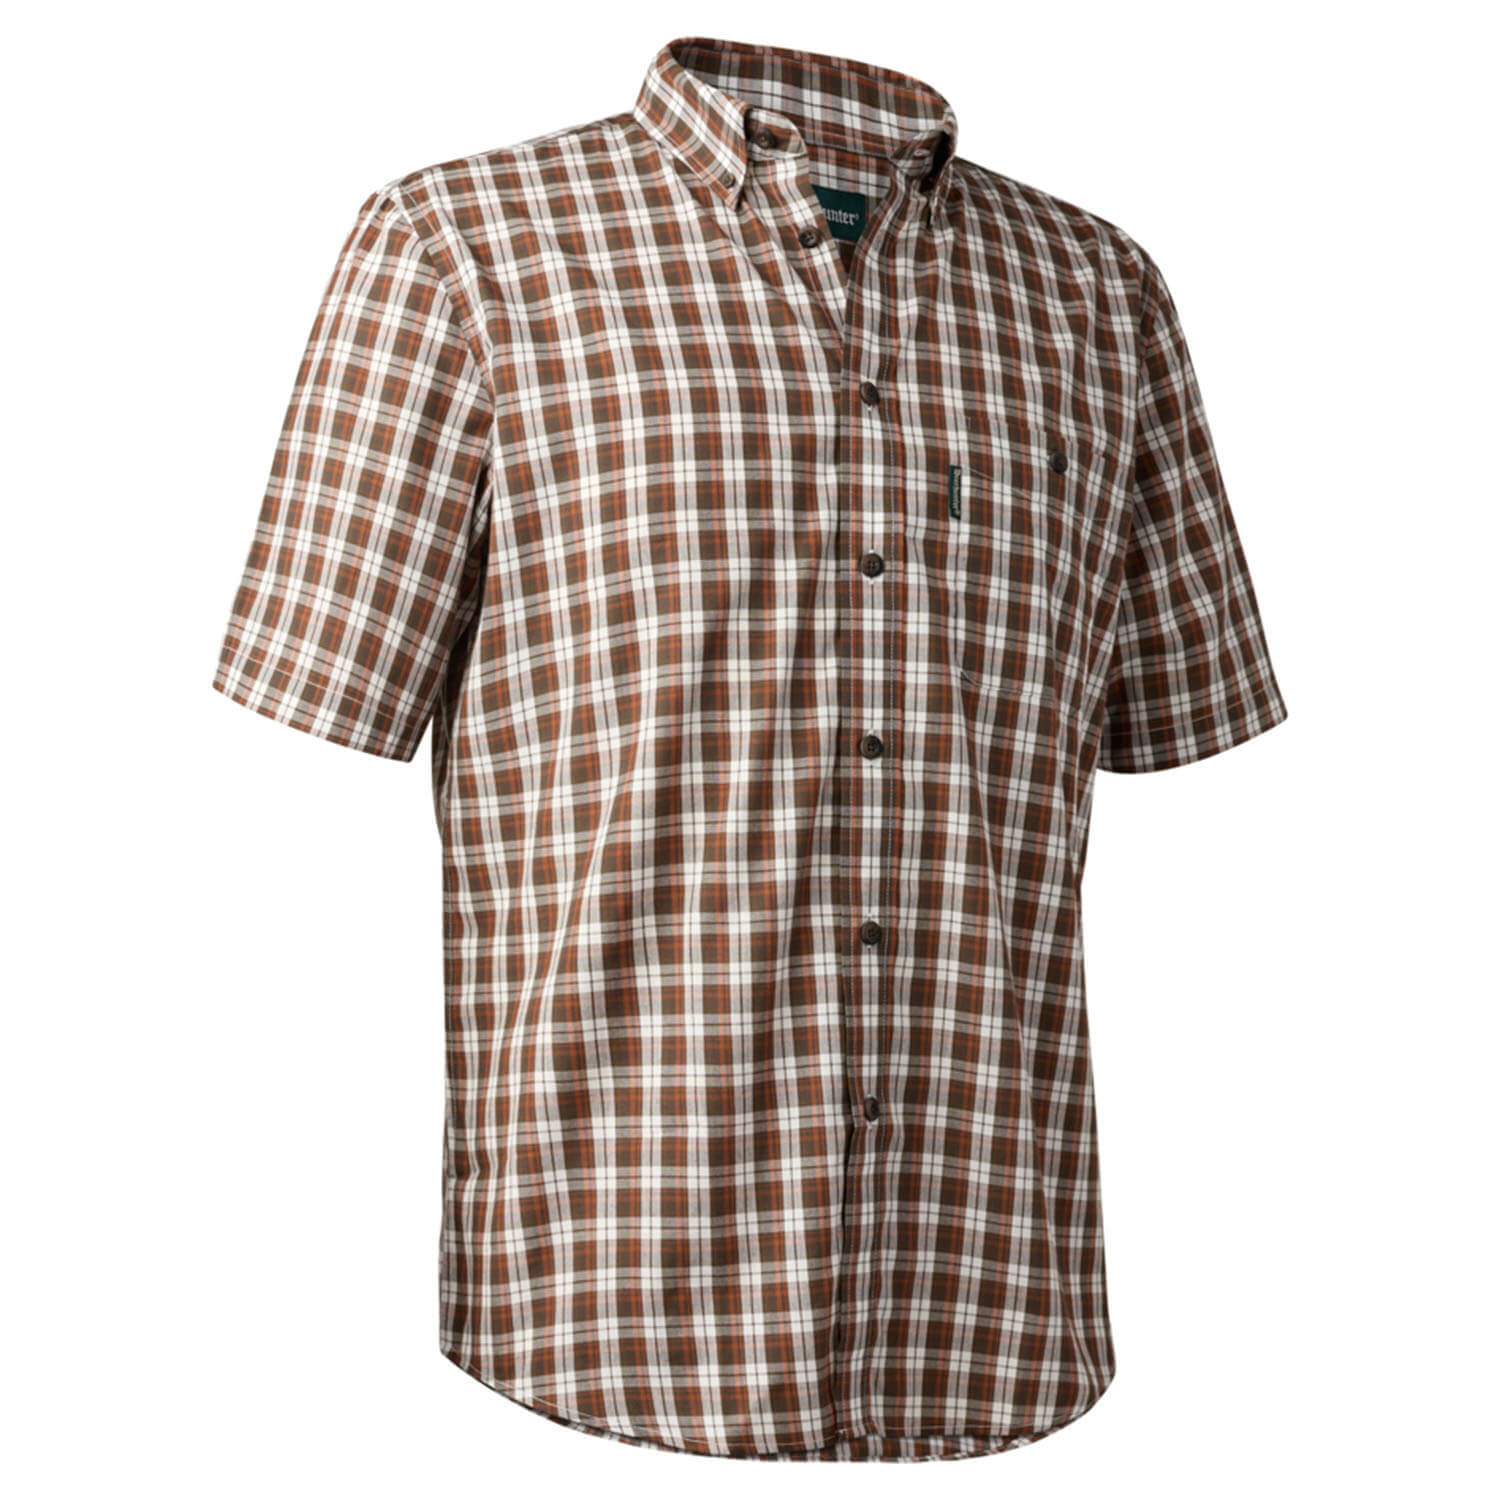  Deerhunter Jachthemd Jeff korte mouw (Bruin geruit) - Overhemden